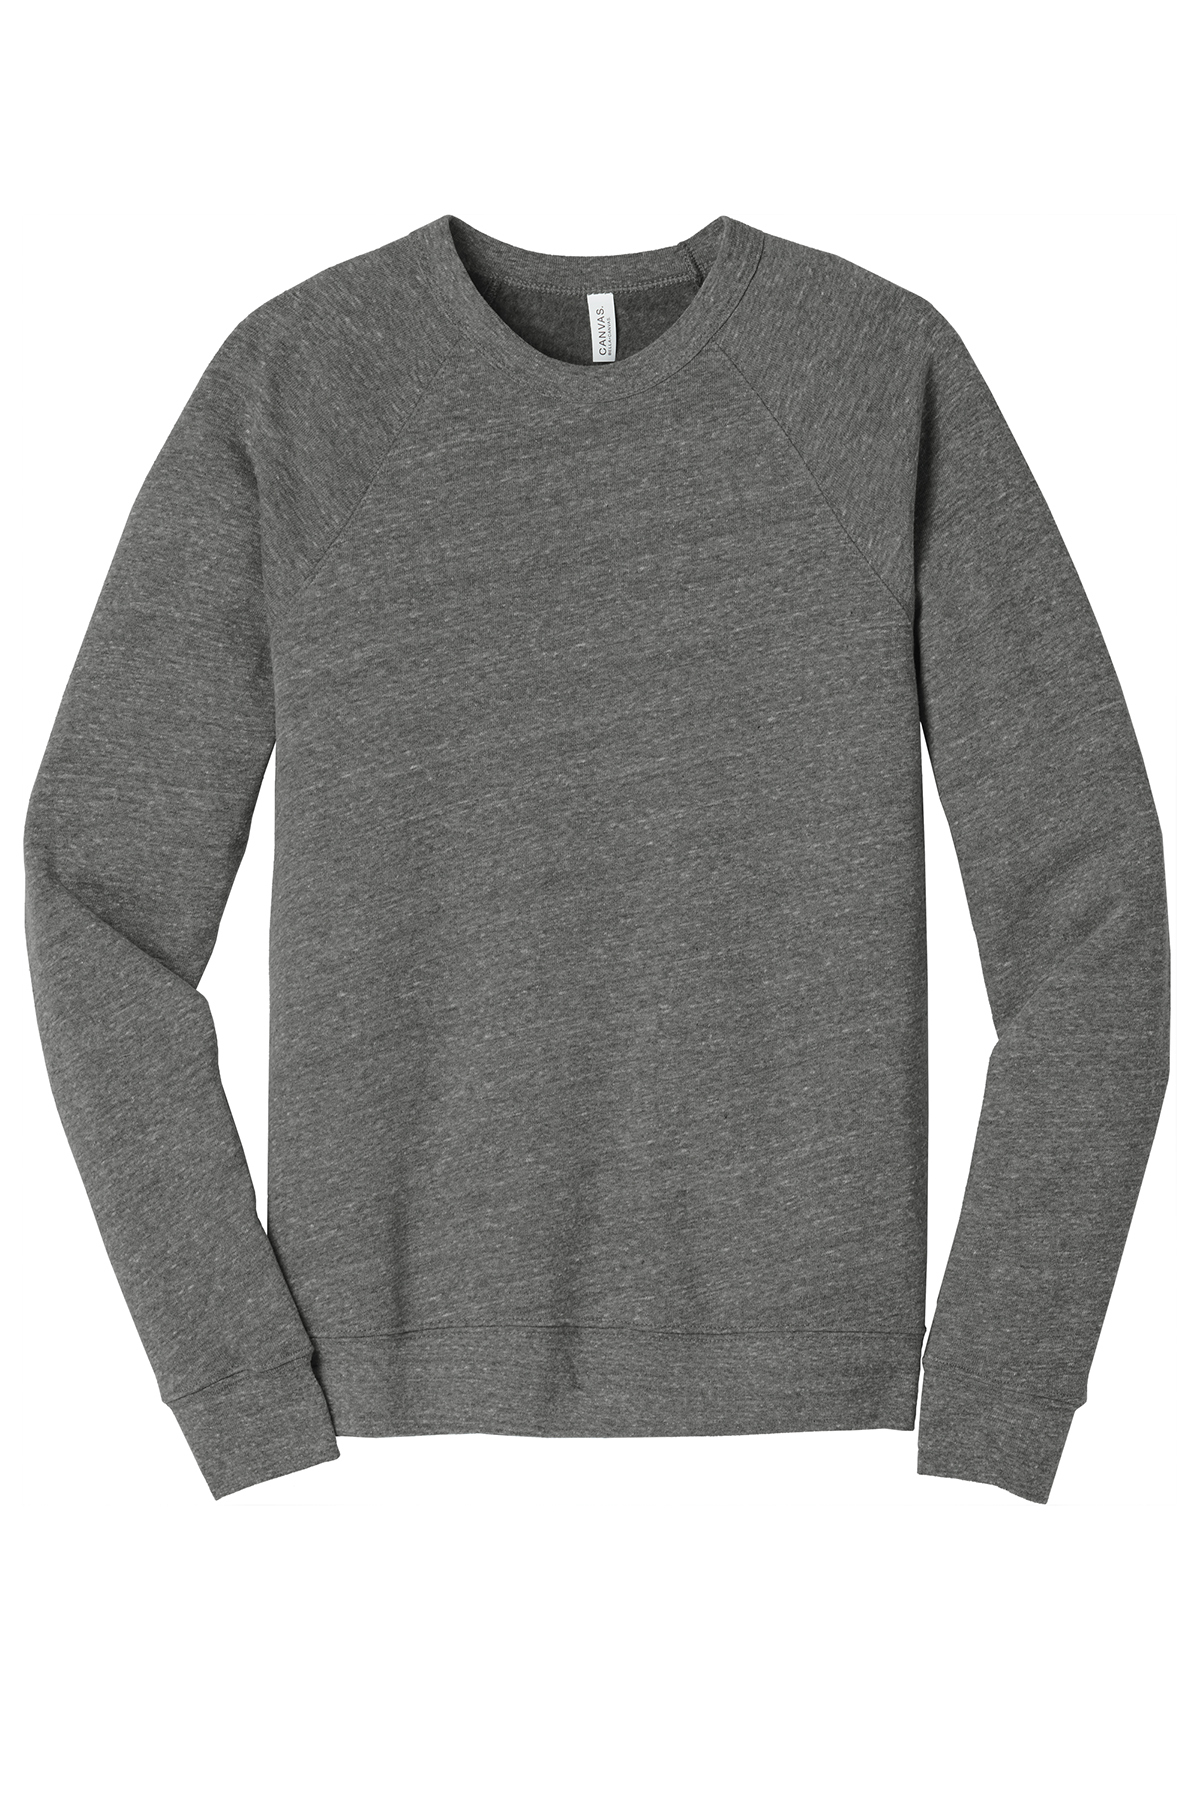 BELLA+CANVAS Unisex Sponge Fleece Raglan Sweatshirt, Product